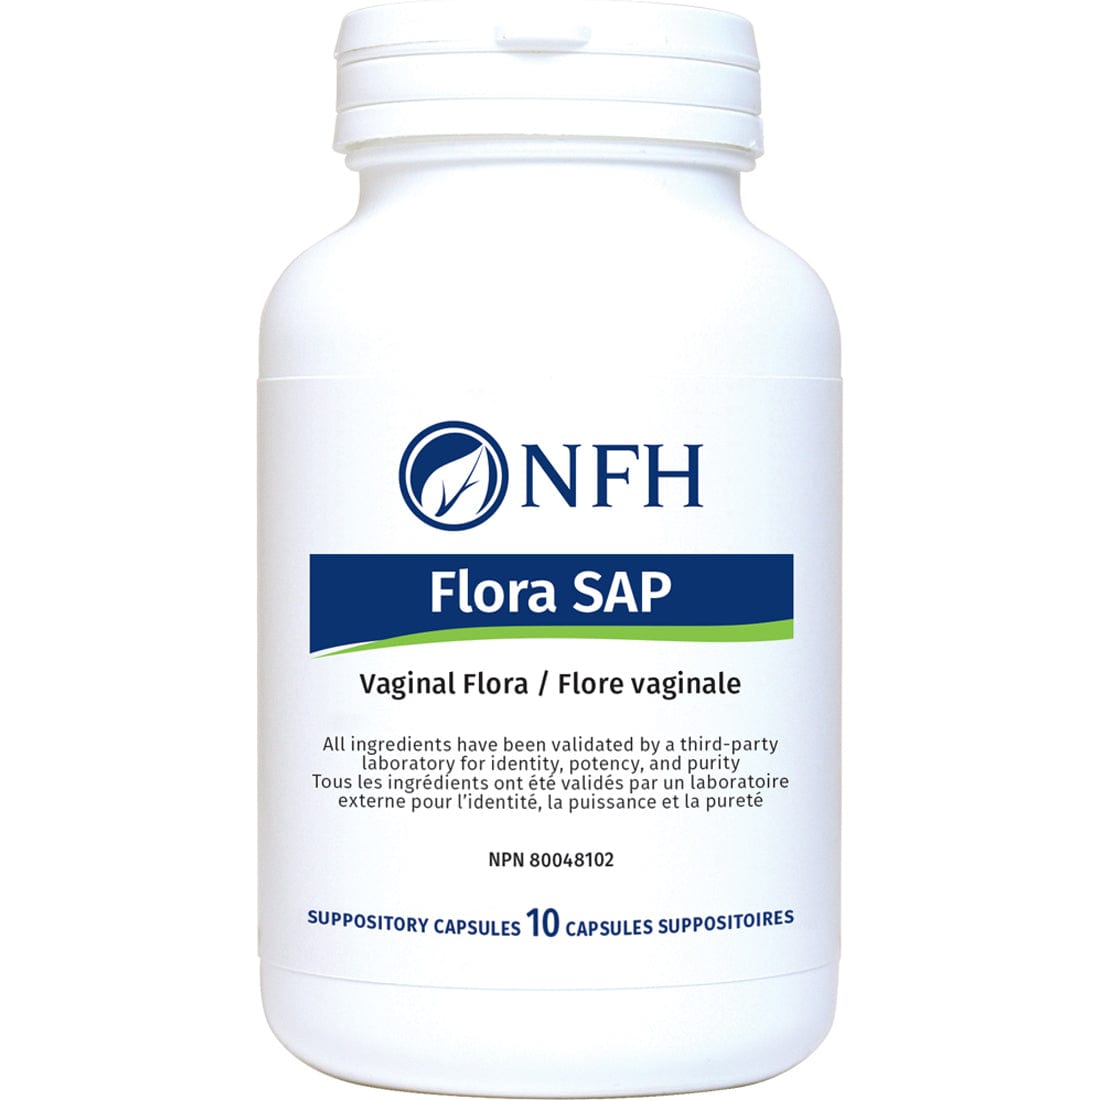 NFH Flora SAP (refrigerated), 10 Capsules